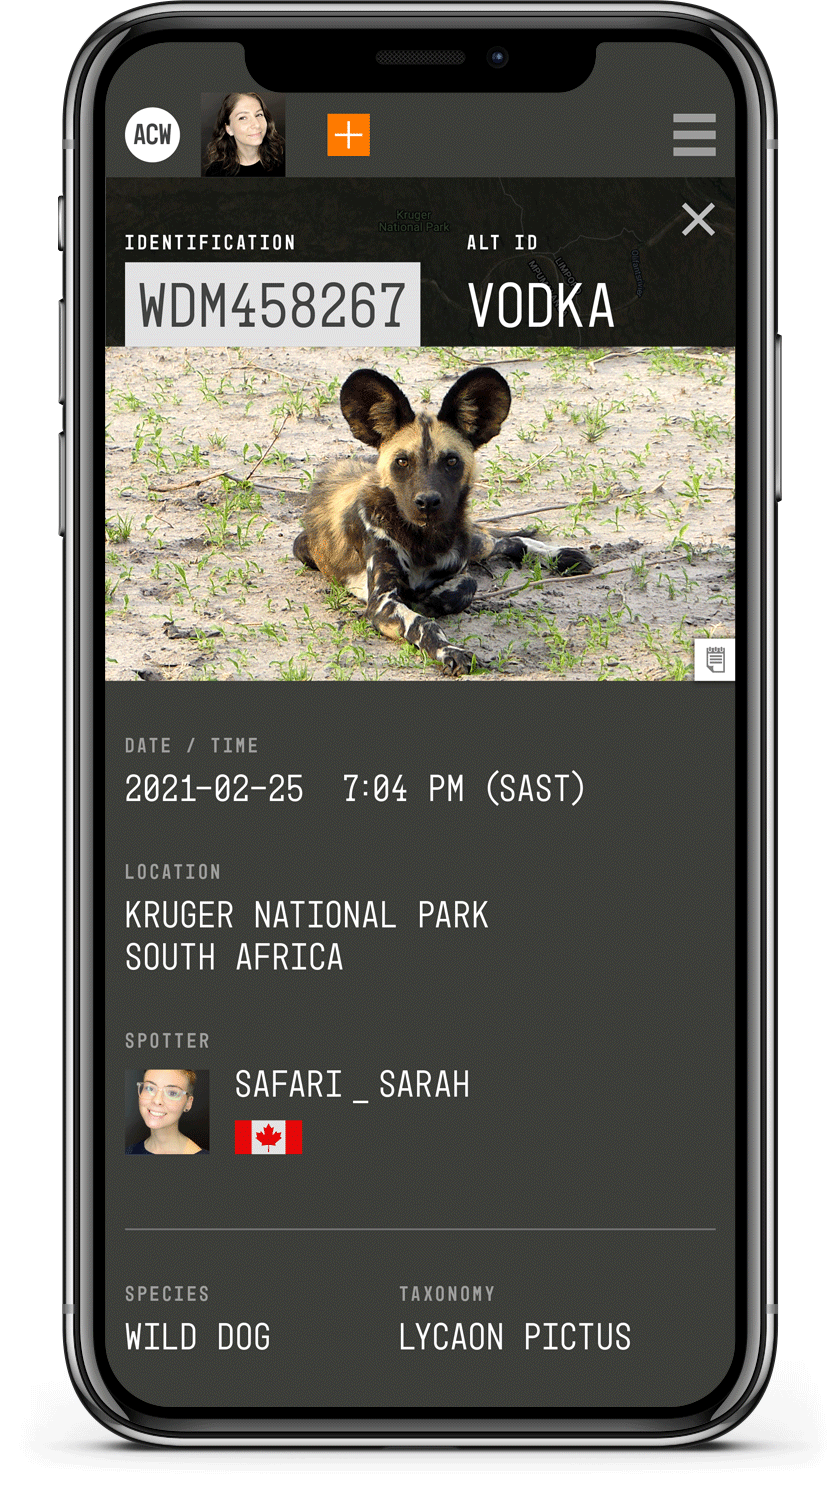 ACW product screenshot of wild dog profile on mobile phone